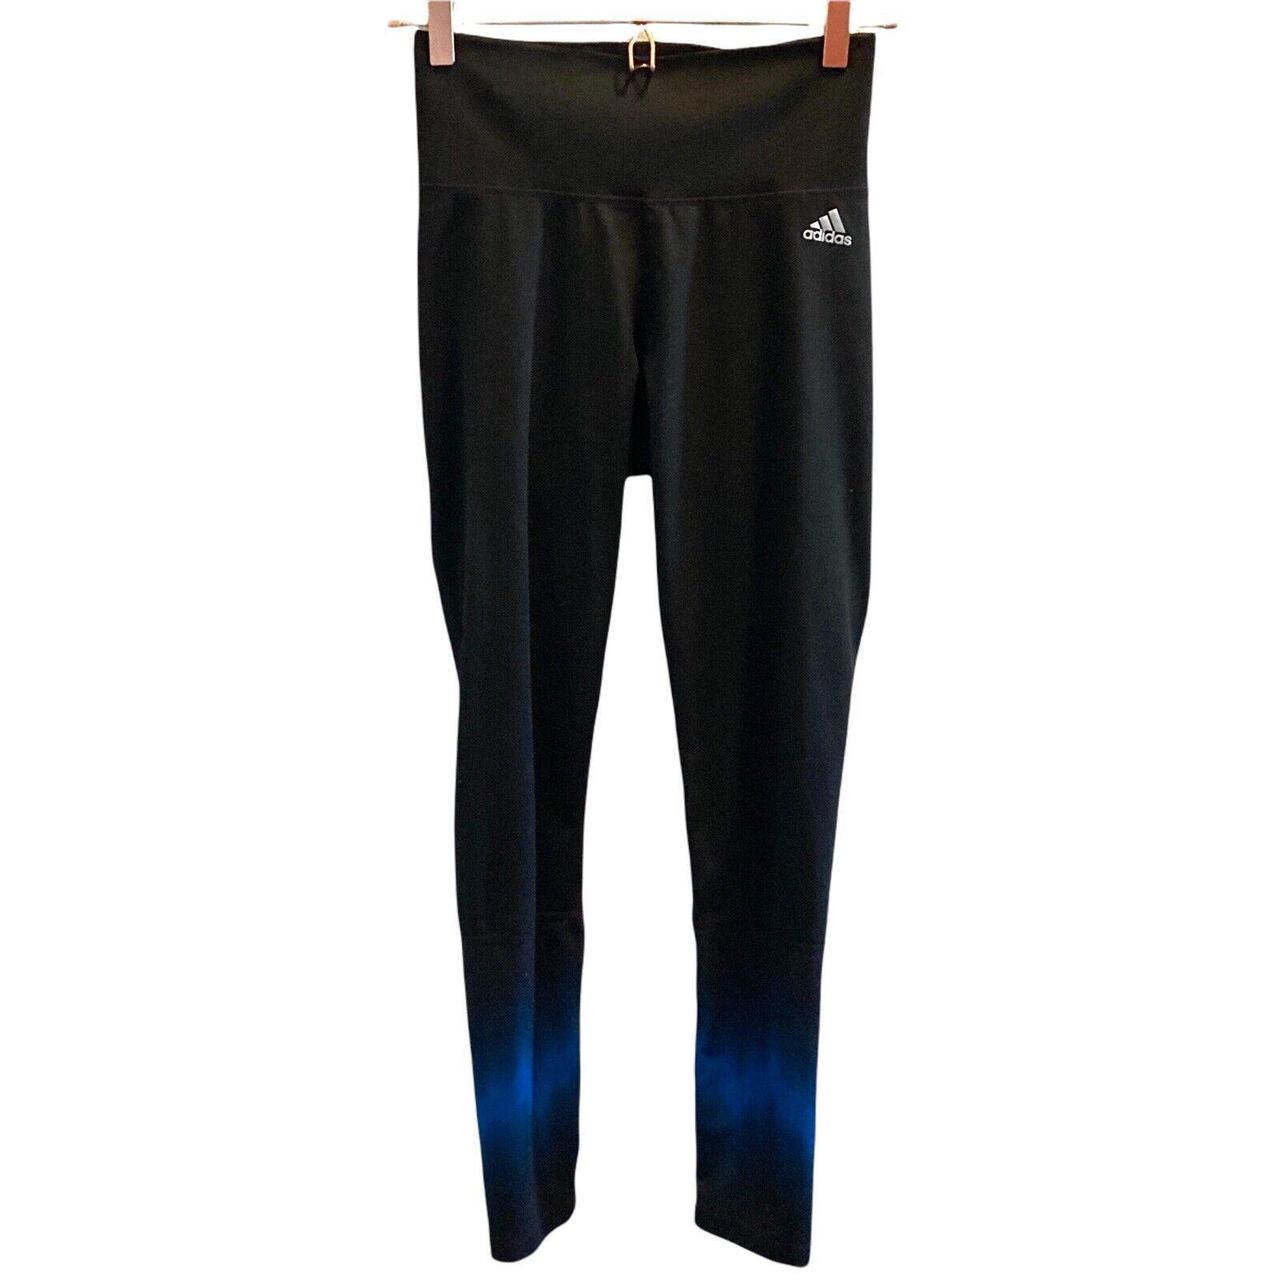 High waist Adidas Climalite leggings, great - Depop